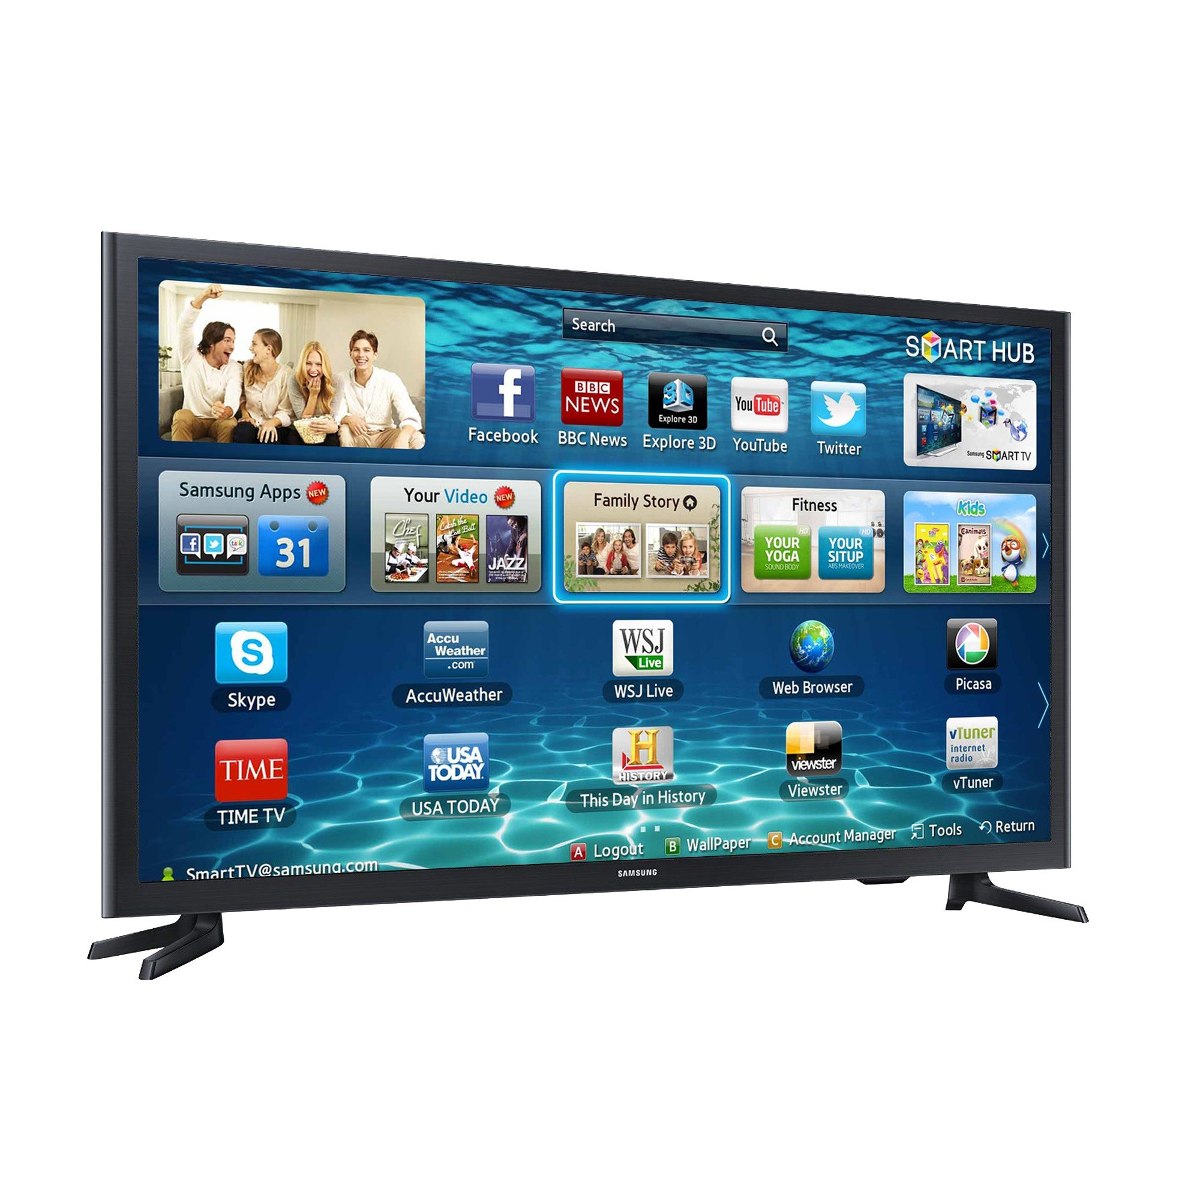 Samsung Smart TV 32. Смарт ТВ 32 дюйма рейтинг 2023.